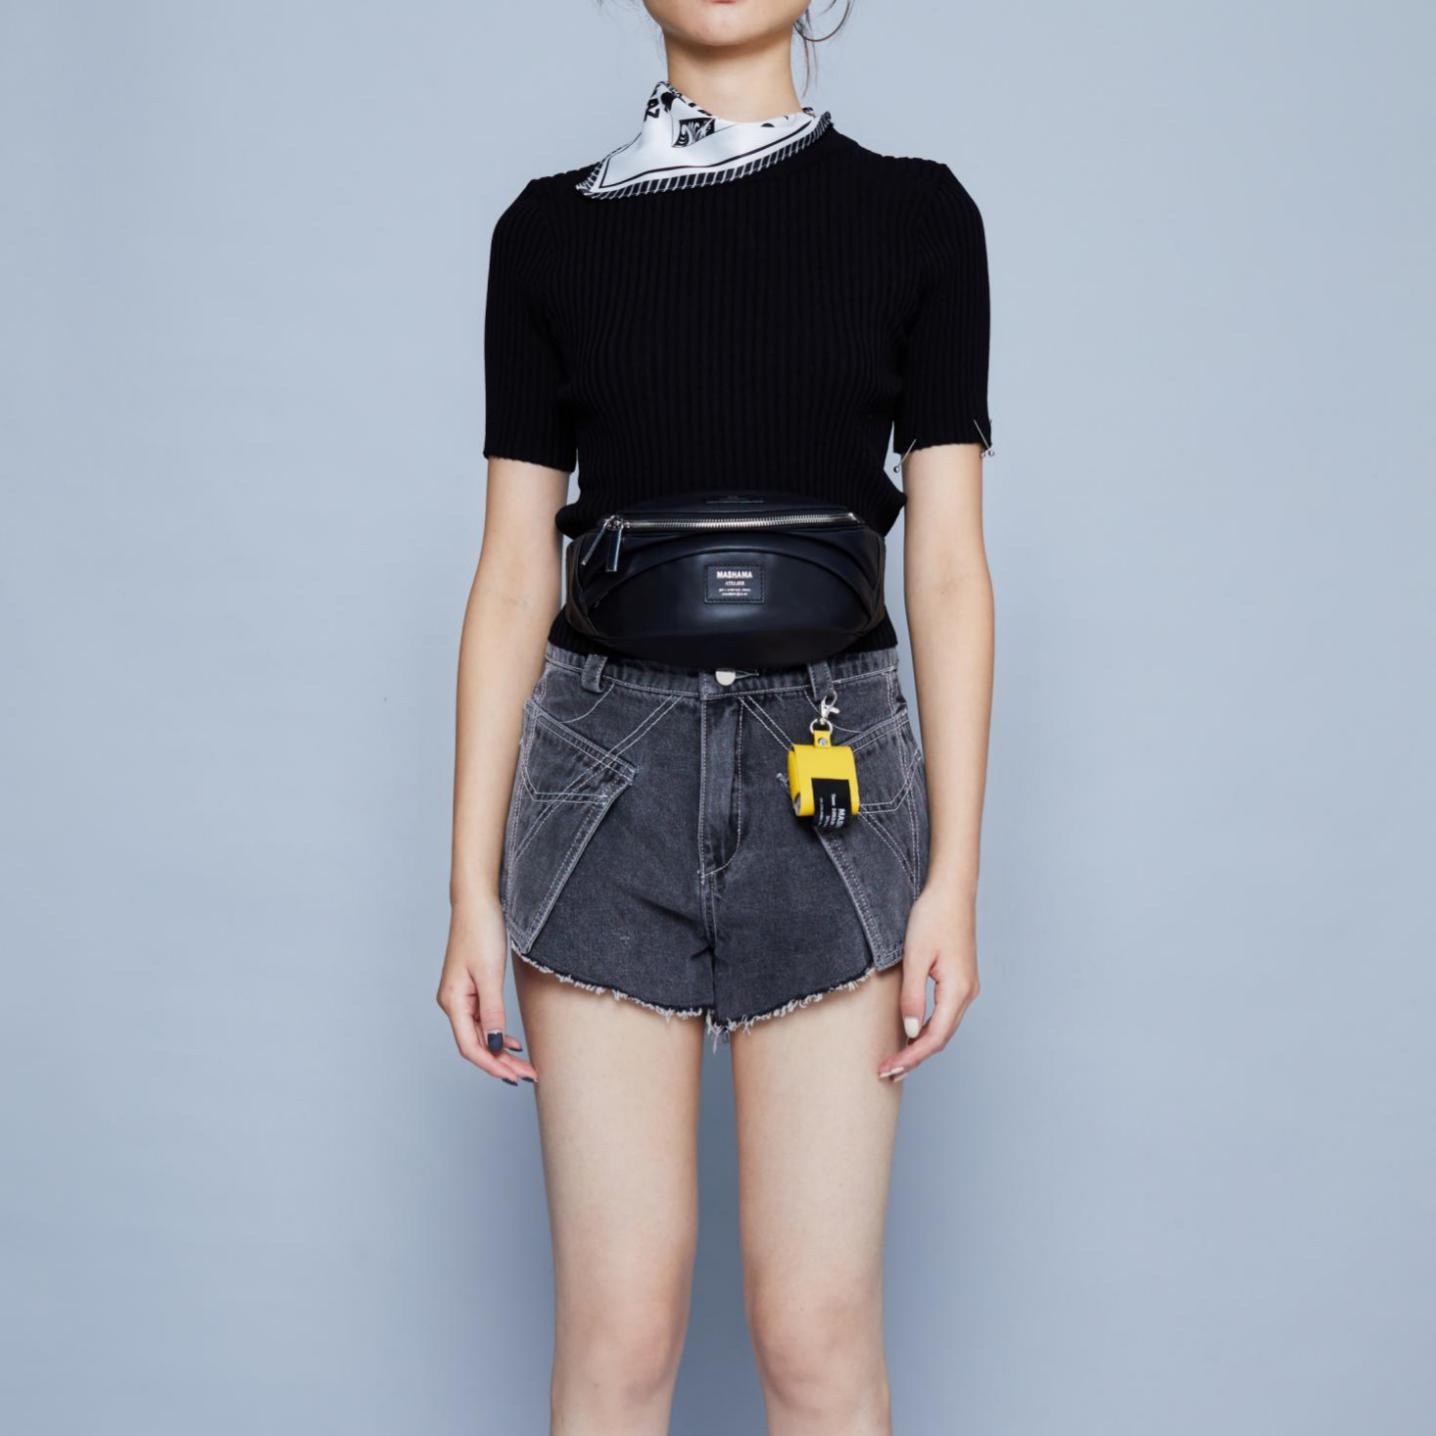 MASHAMAZ原创设计师2020春夏新款黑色露背针织上衣女